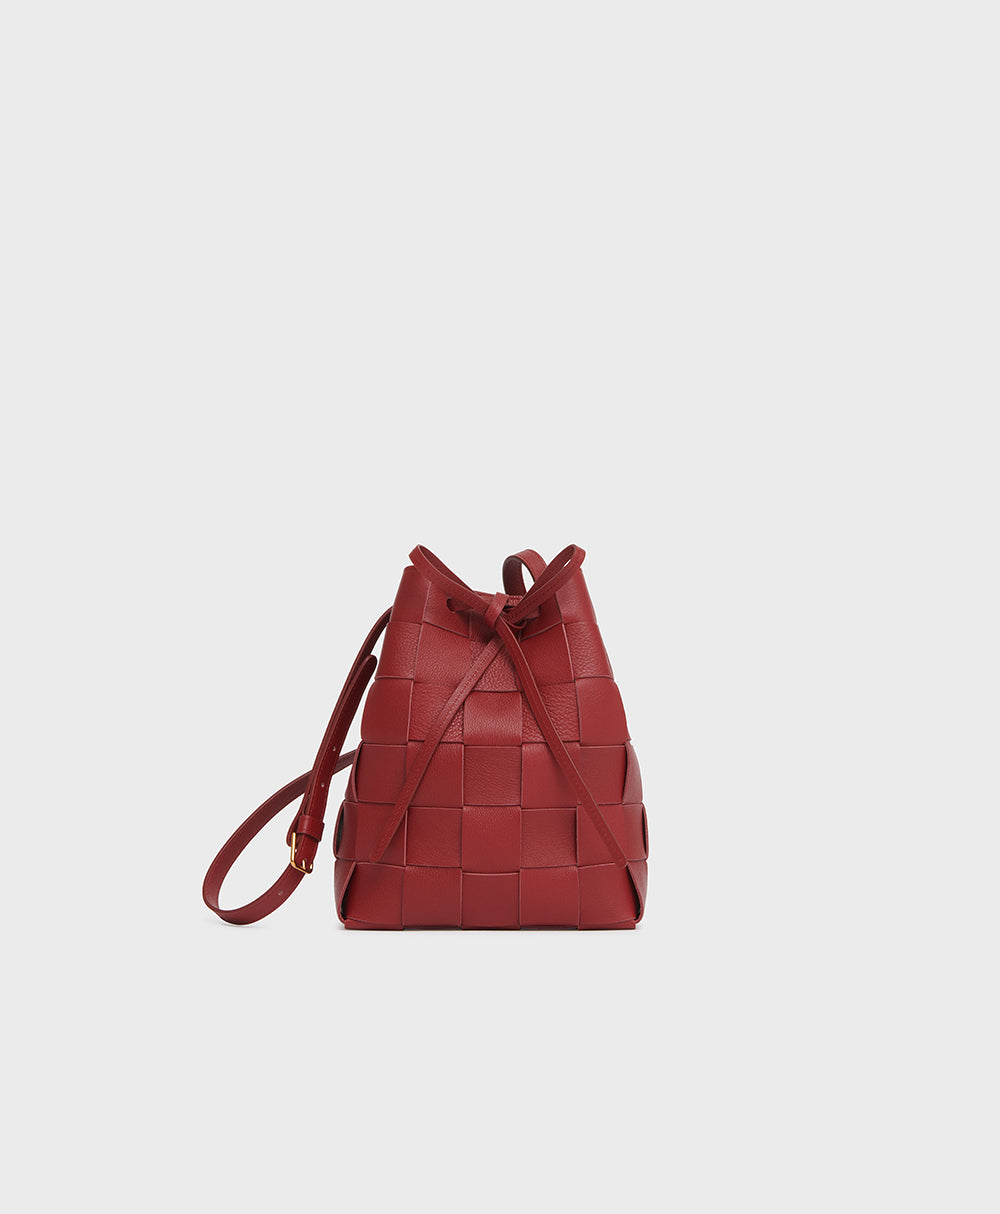 Birkin 30 Vegan Leather Handbag Organizer in Cherry Red Color